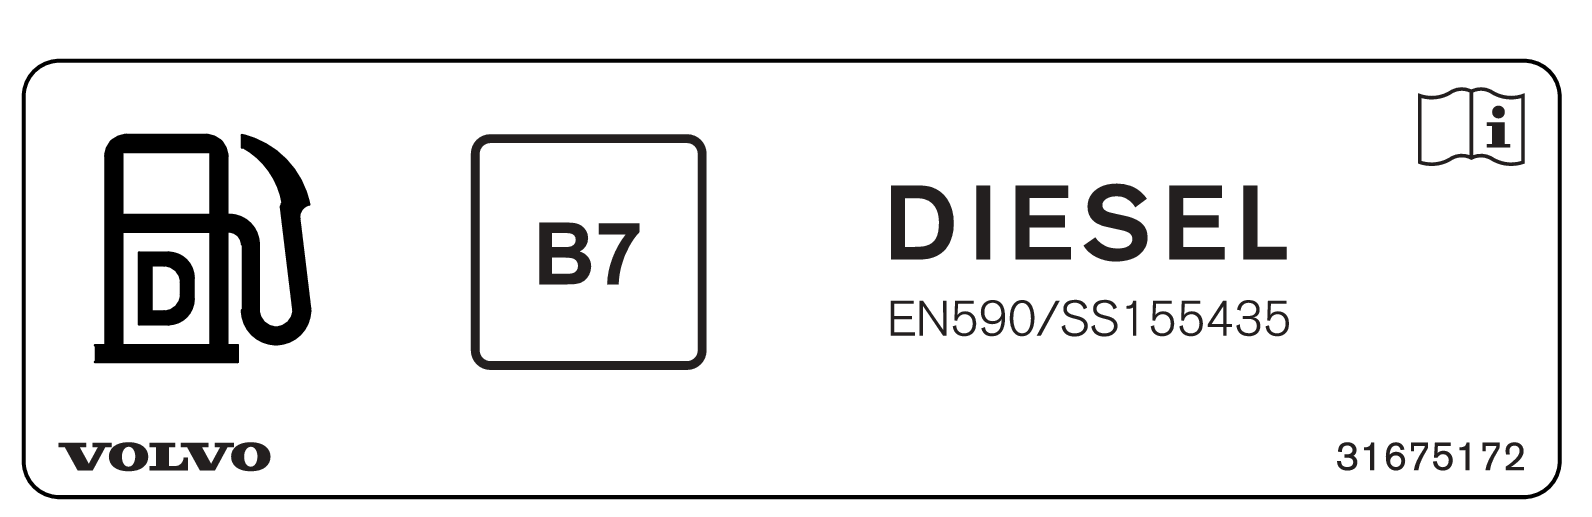 SuSi - 19w11 - Fuel label - Decal-diesel